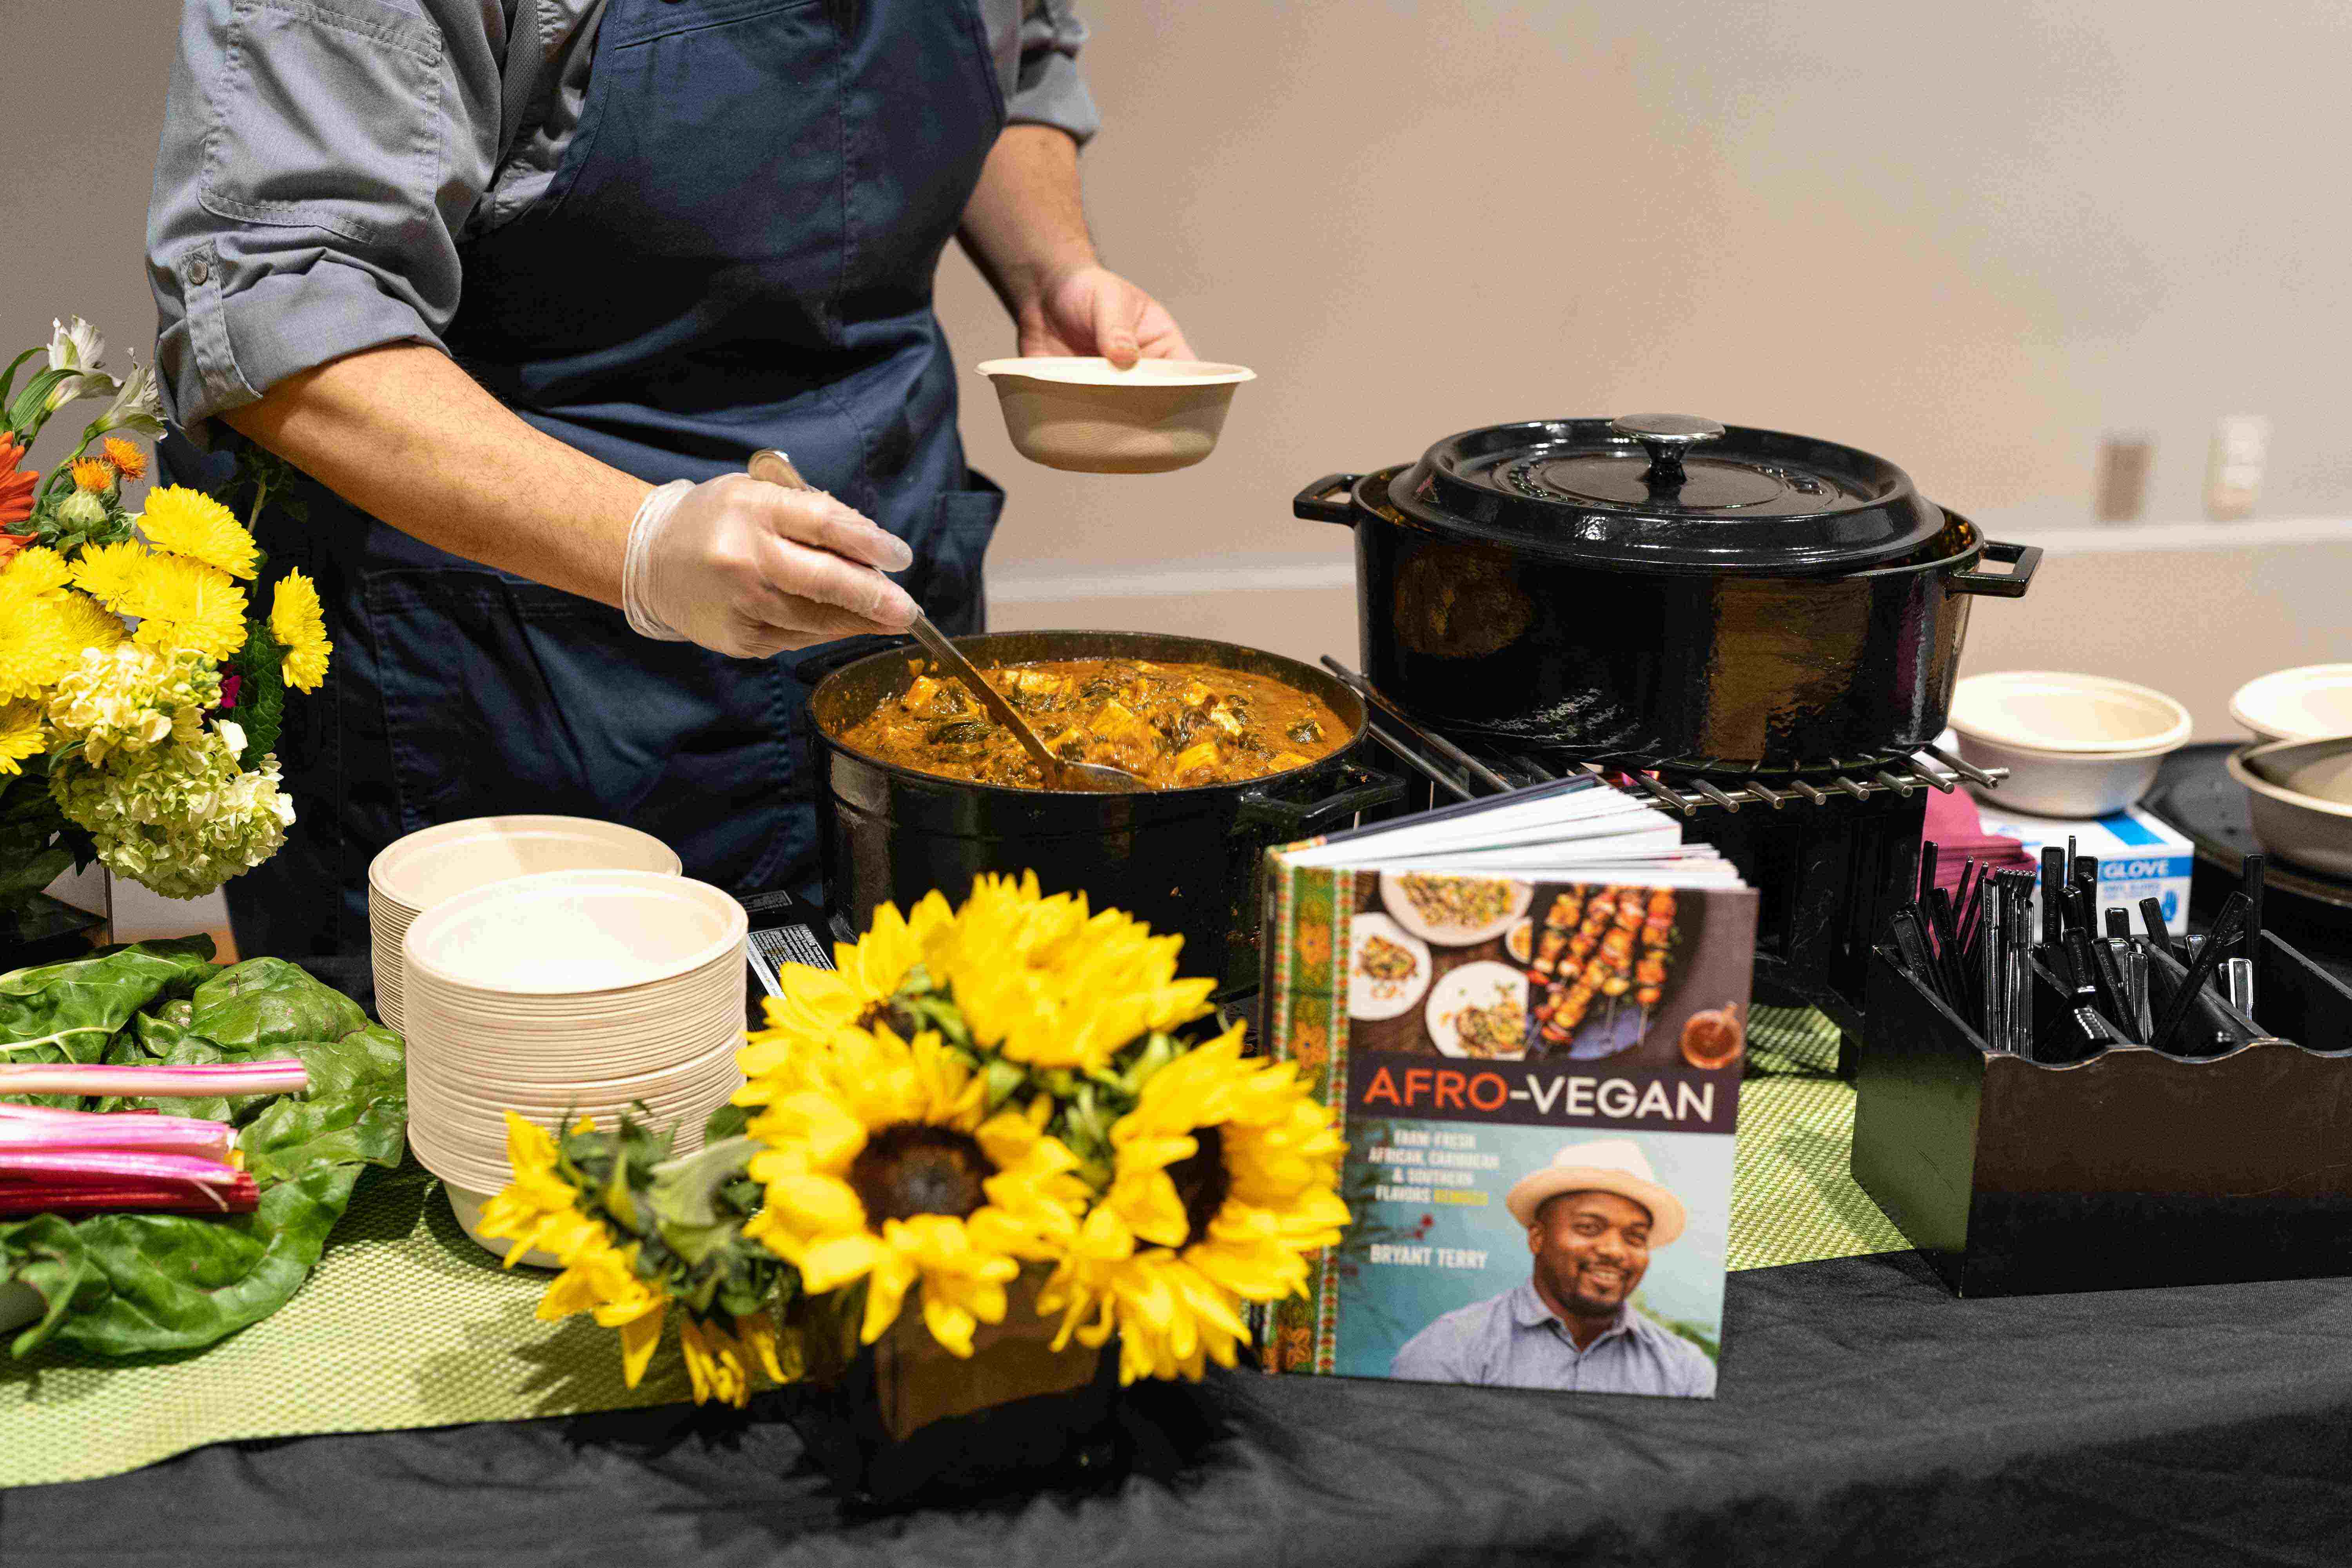 Bryant Terry's Award-Winning Cookbook: Afro-Vegan. Served up alongside a delicious peanut greens & tofu dish.